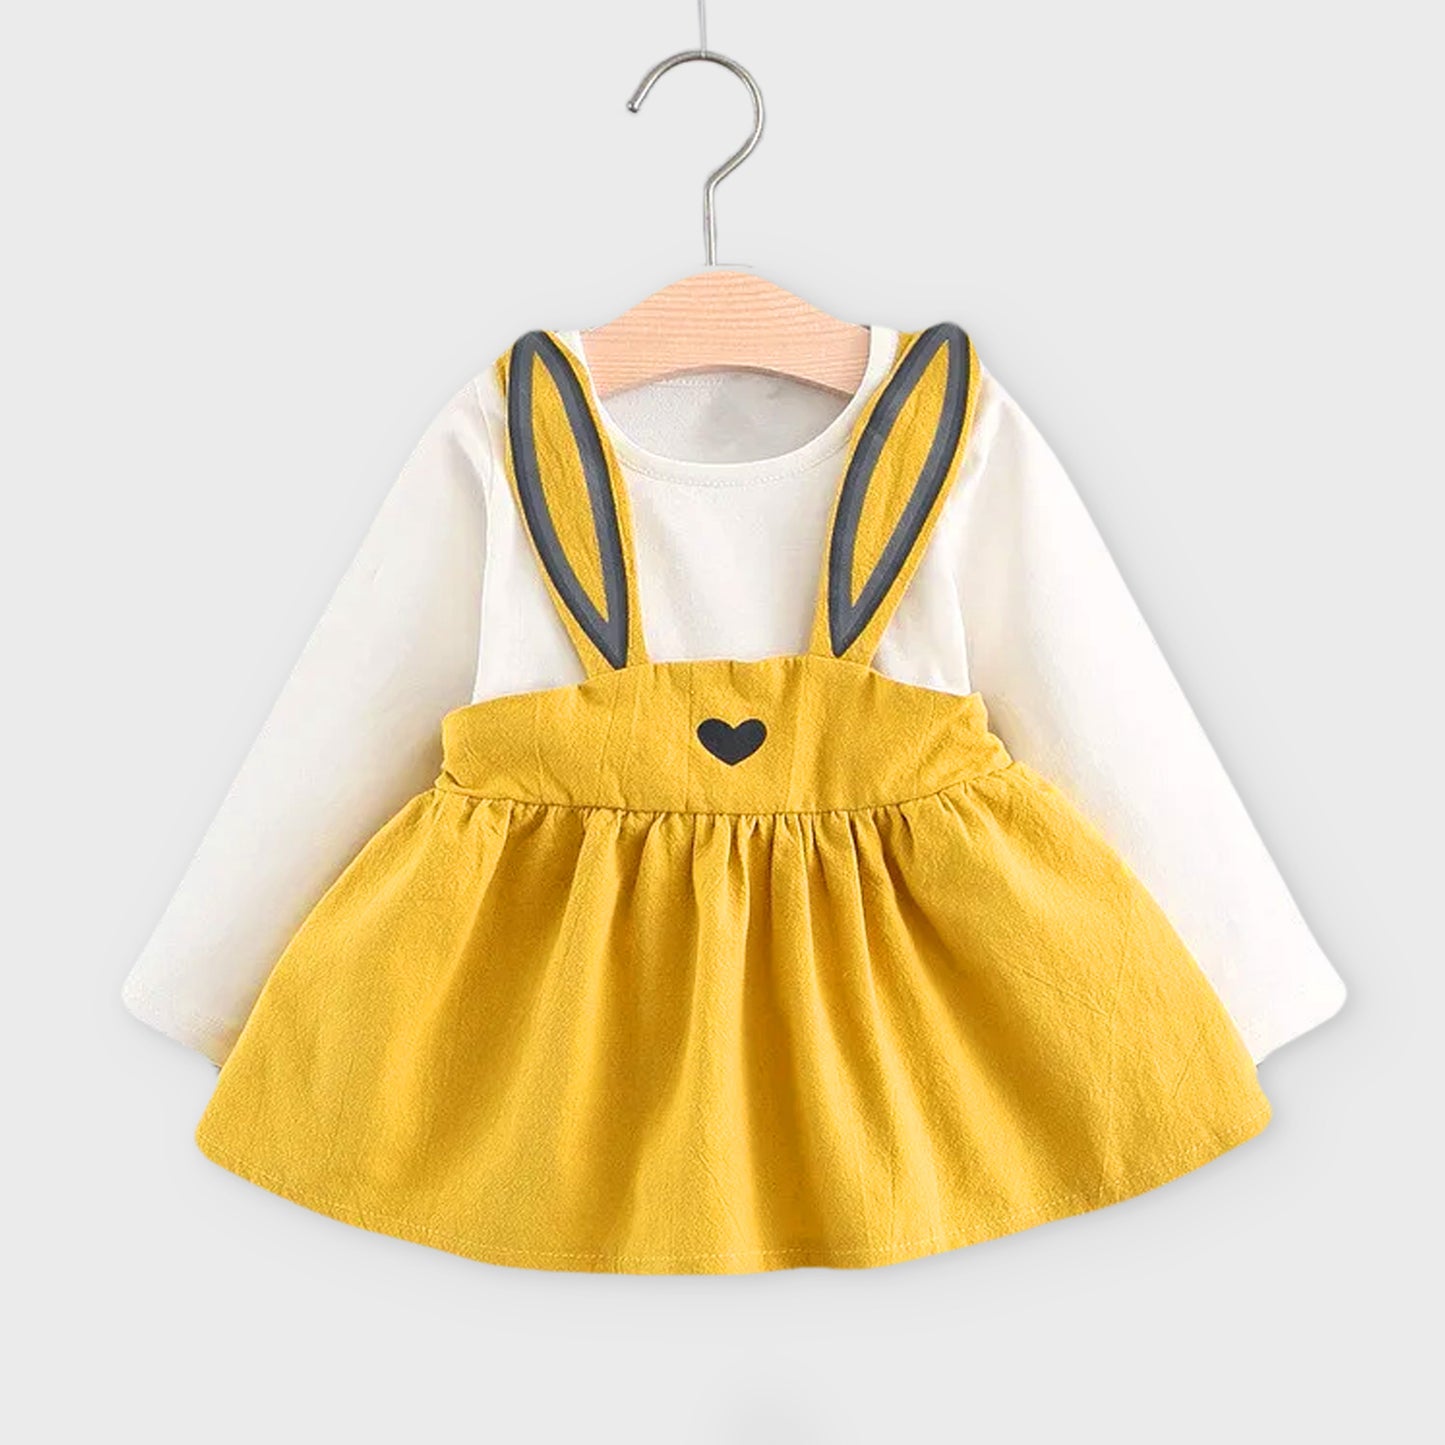 Girls Toddler Bunny Style Skirt set (Winter Stuff)